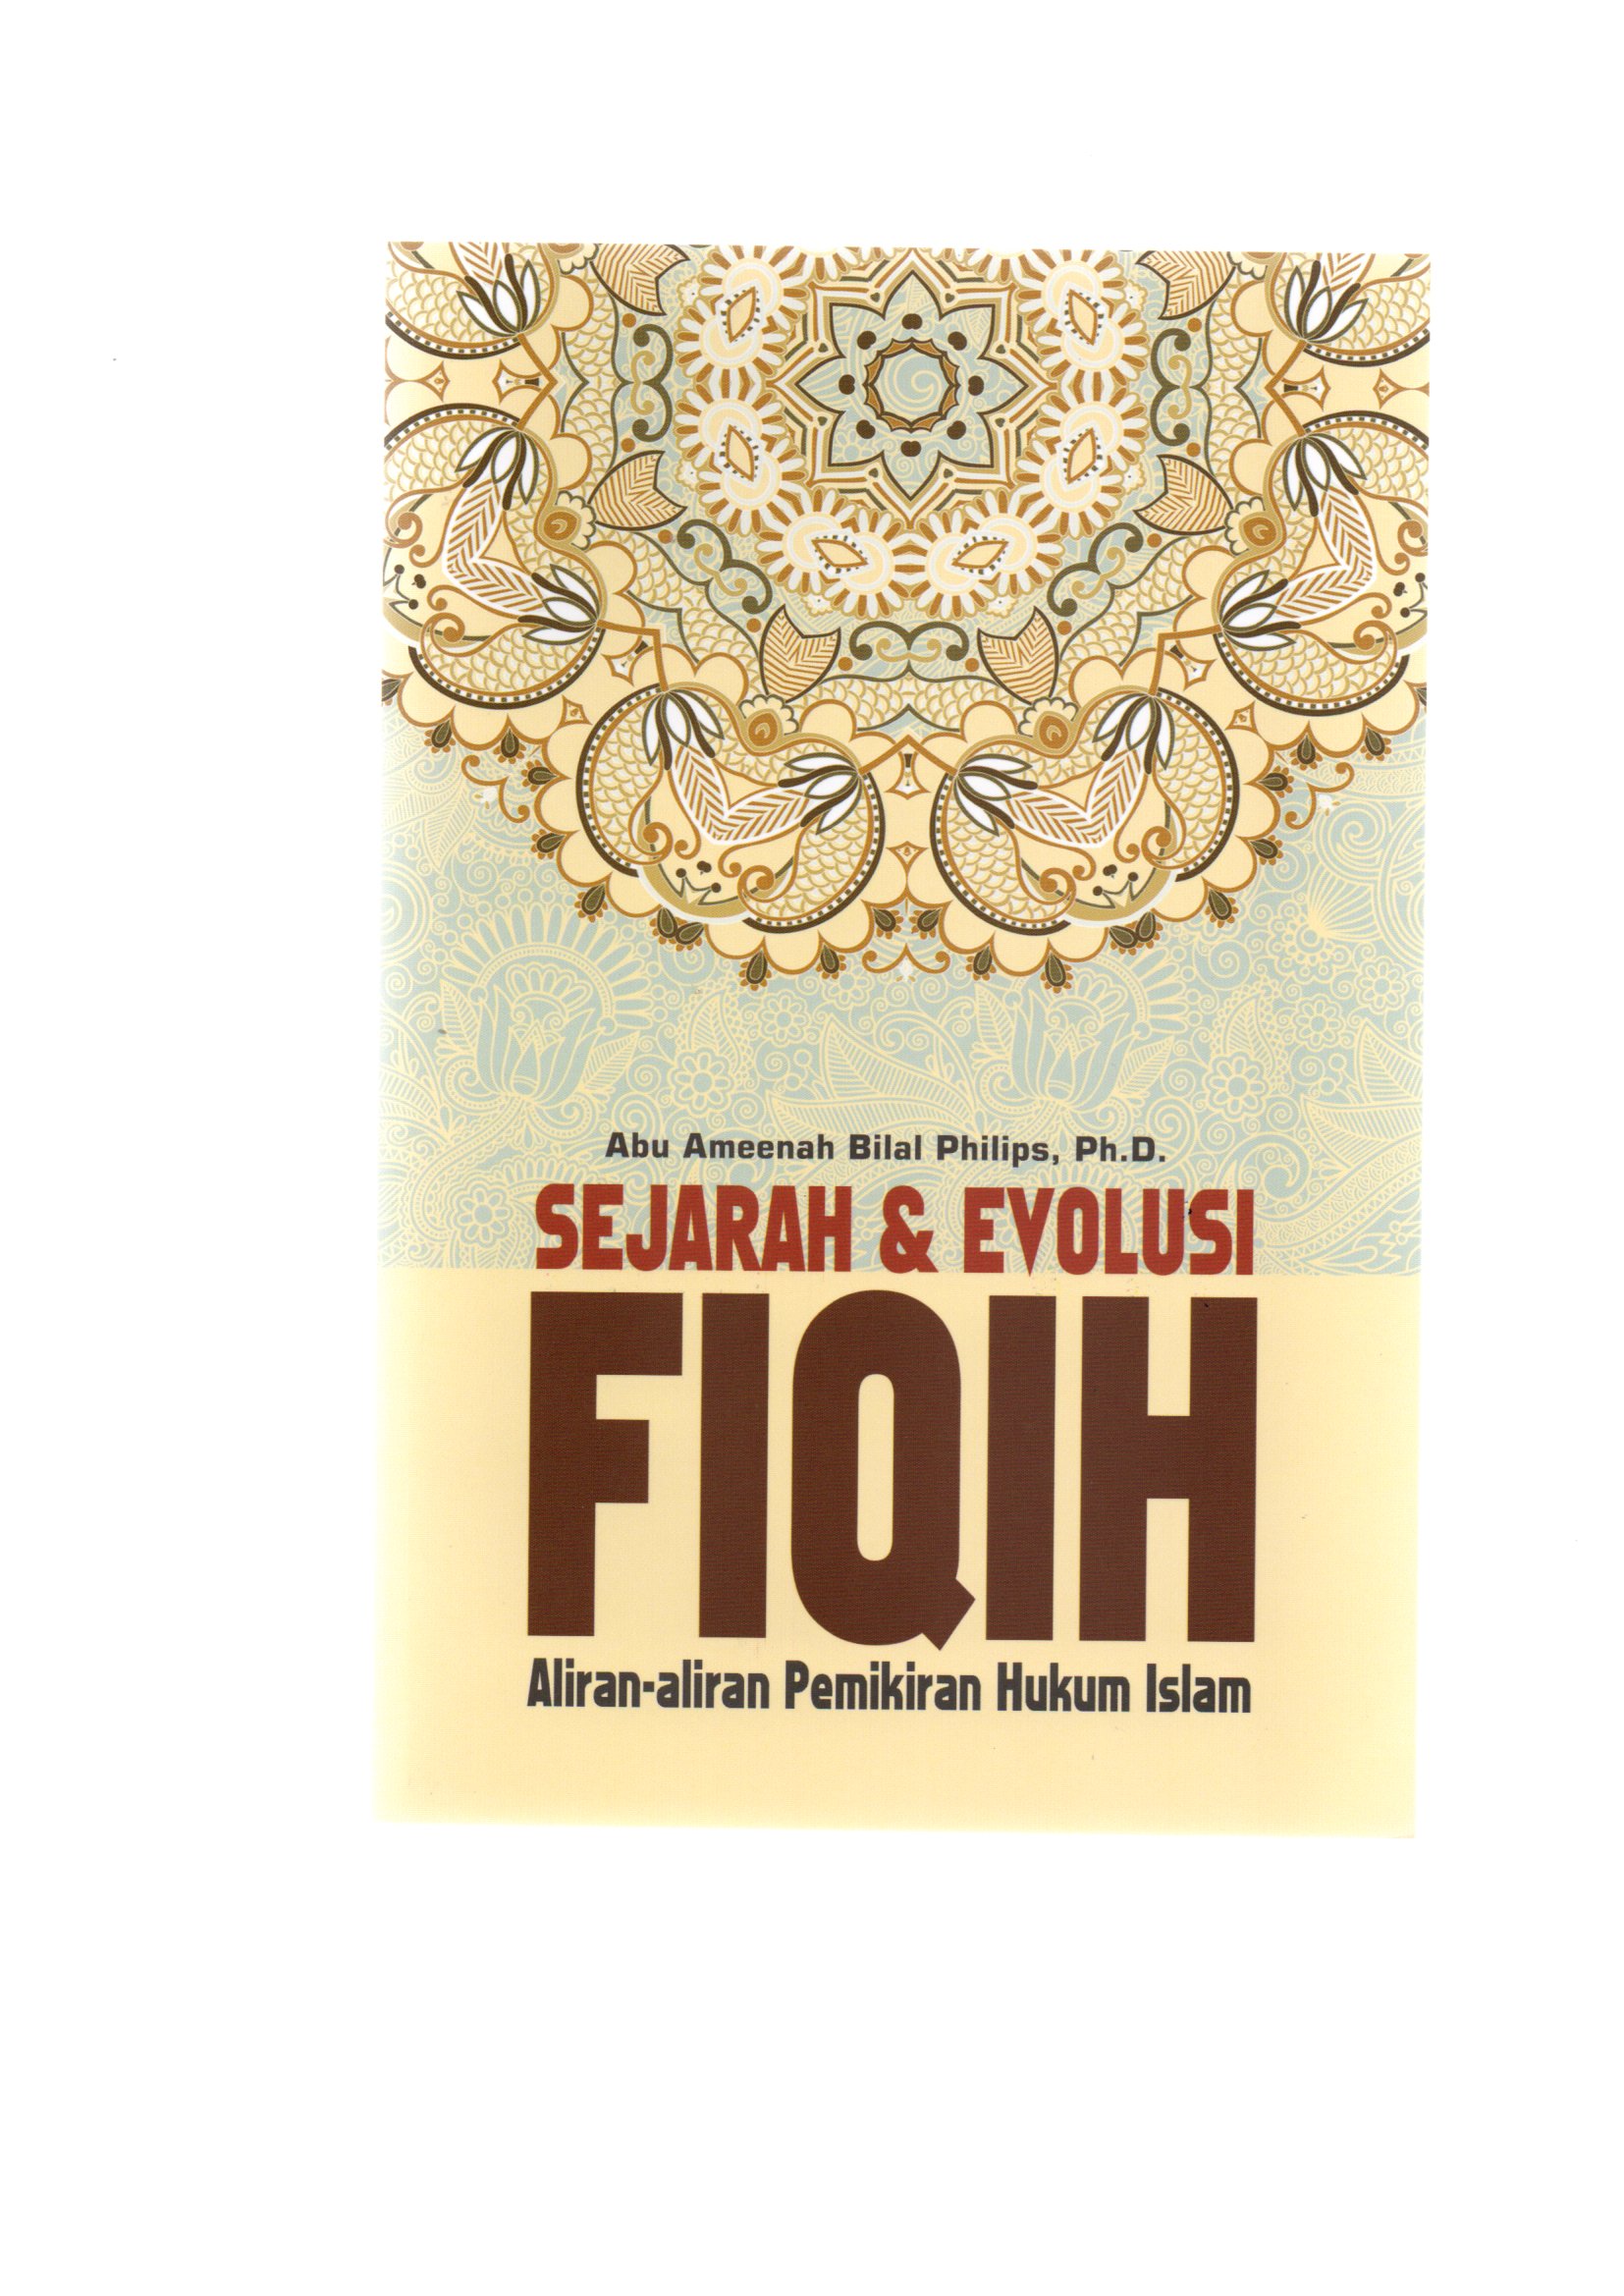 Sejarah dan evolusi fiqih :  aliran-aliran pemikiran hukum islam